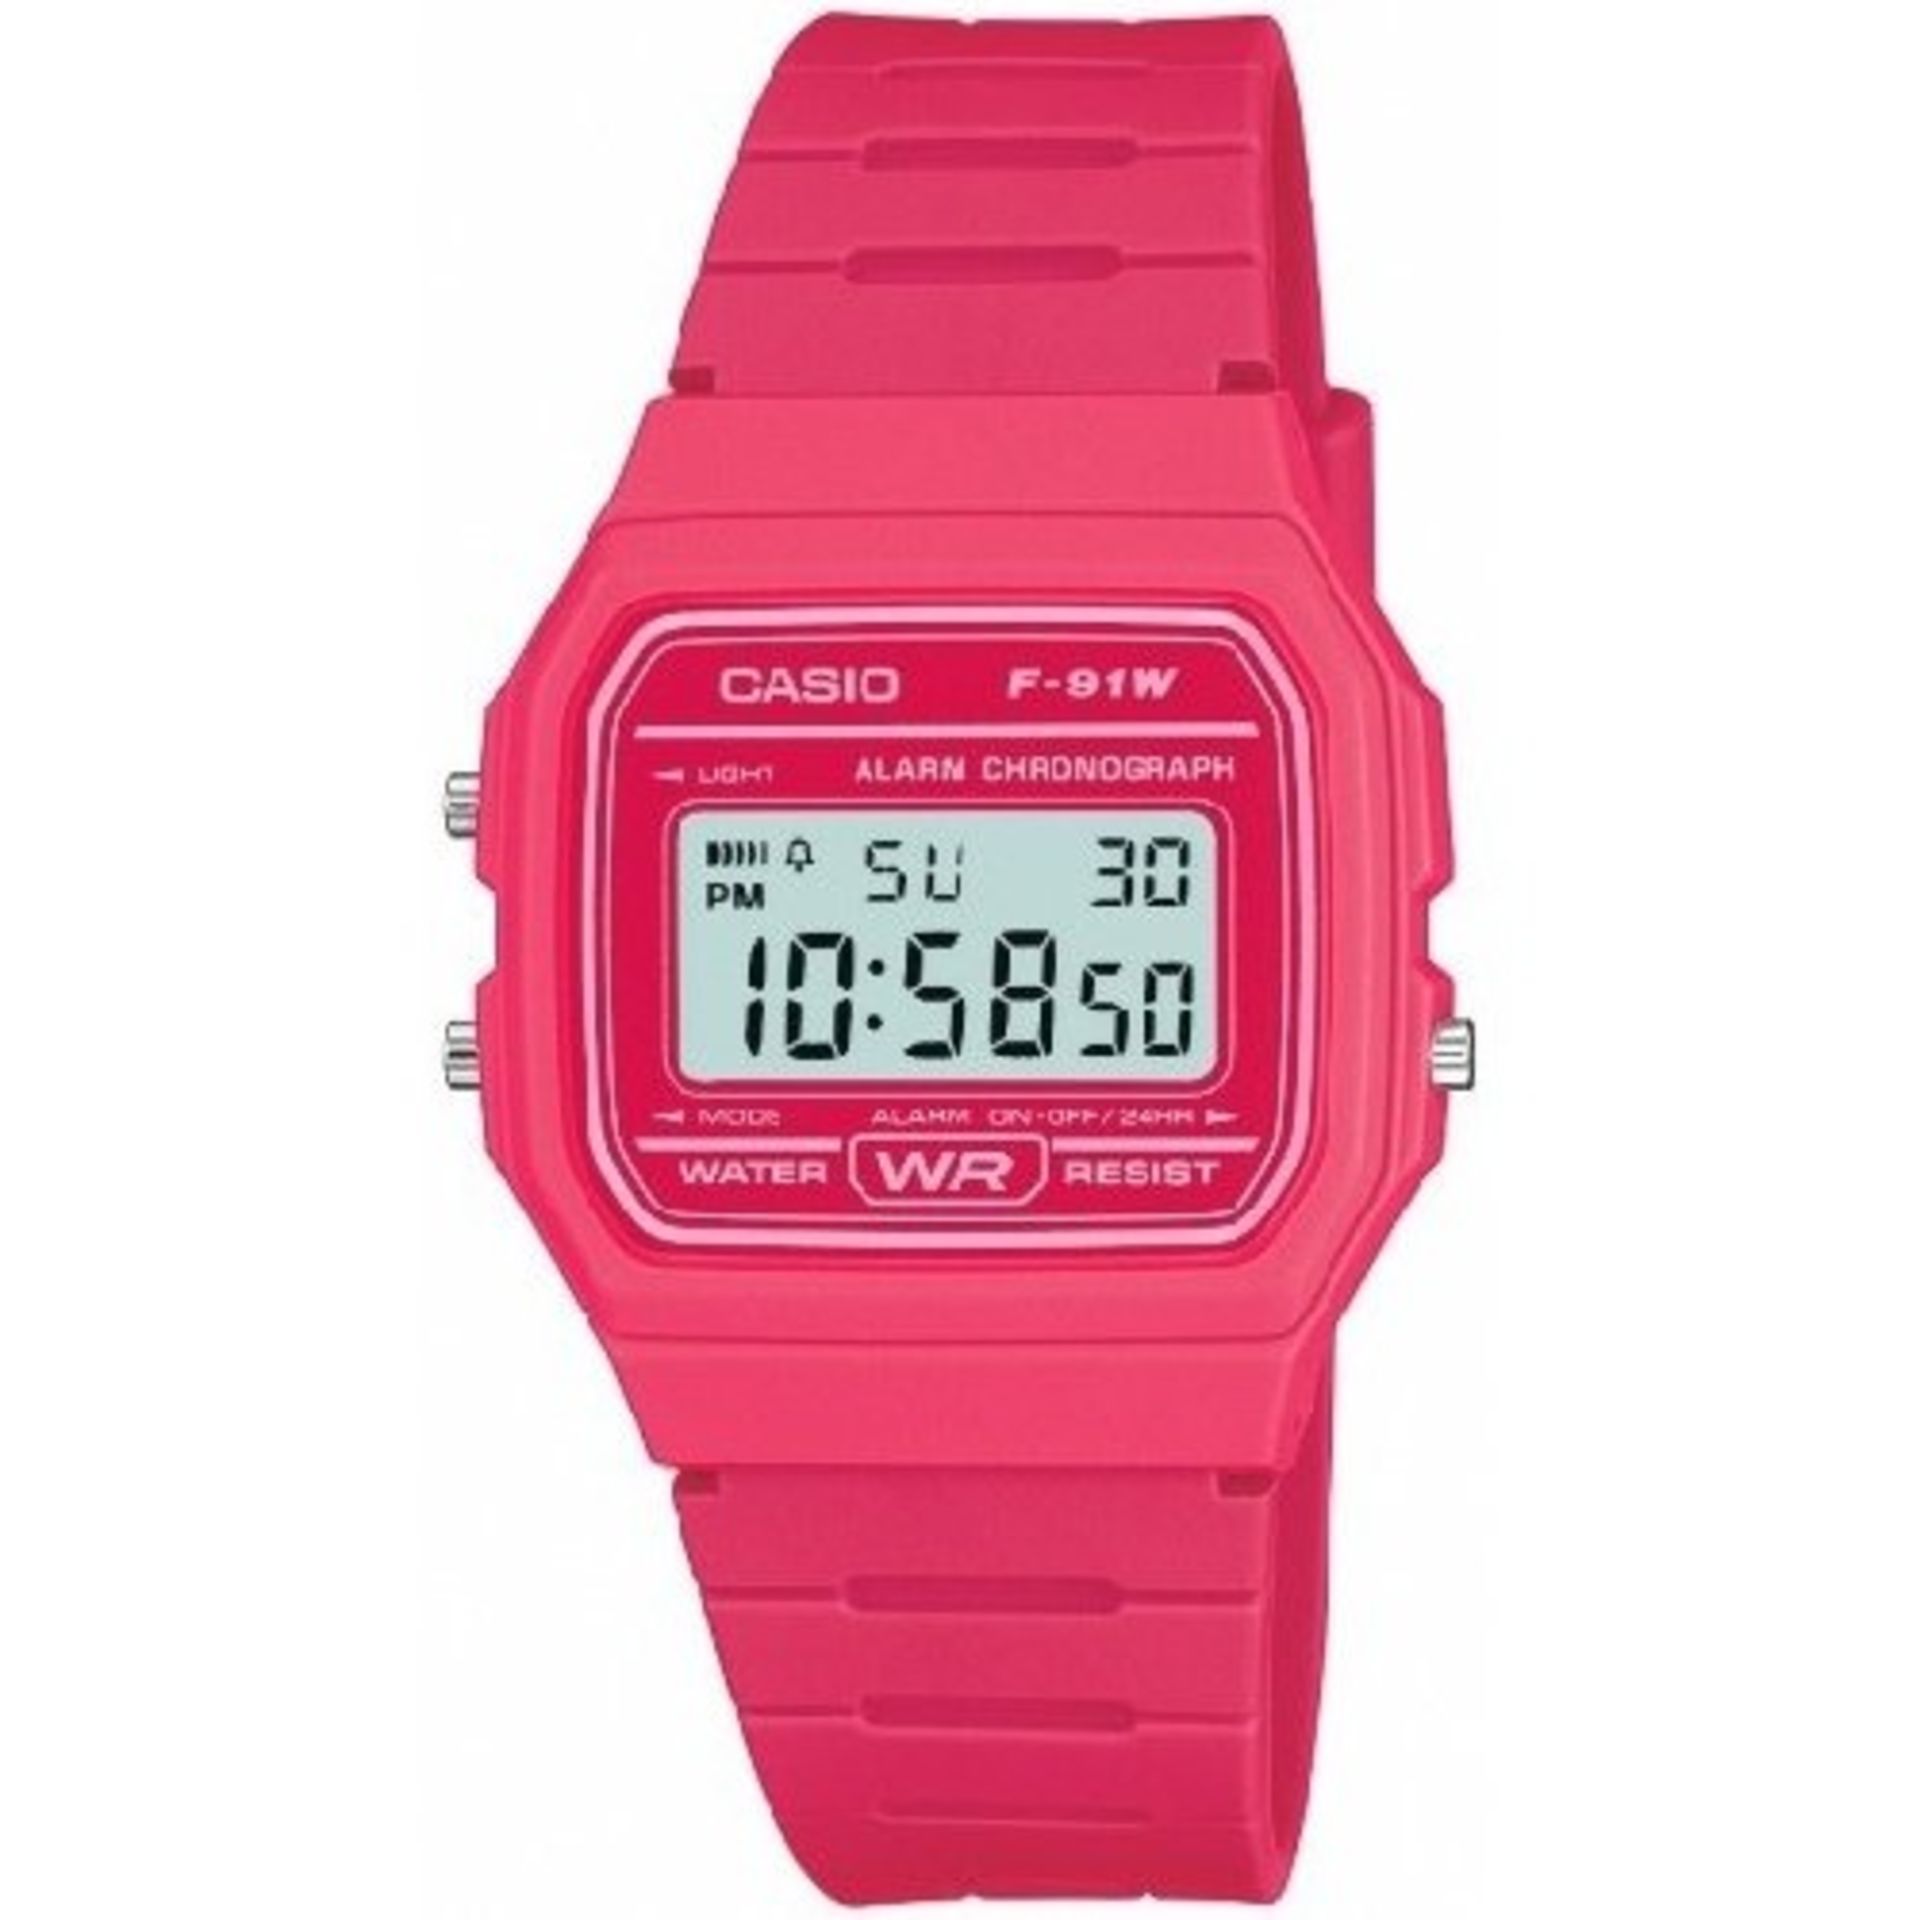 V Ladies Pink Water Resistant Alarm Chronograph Casio Watch